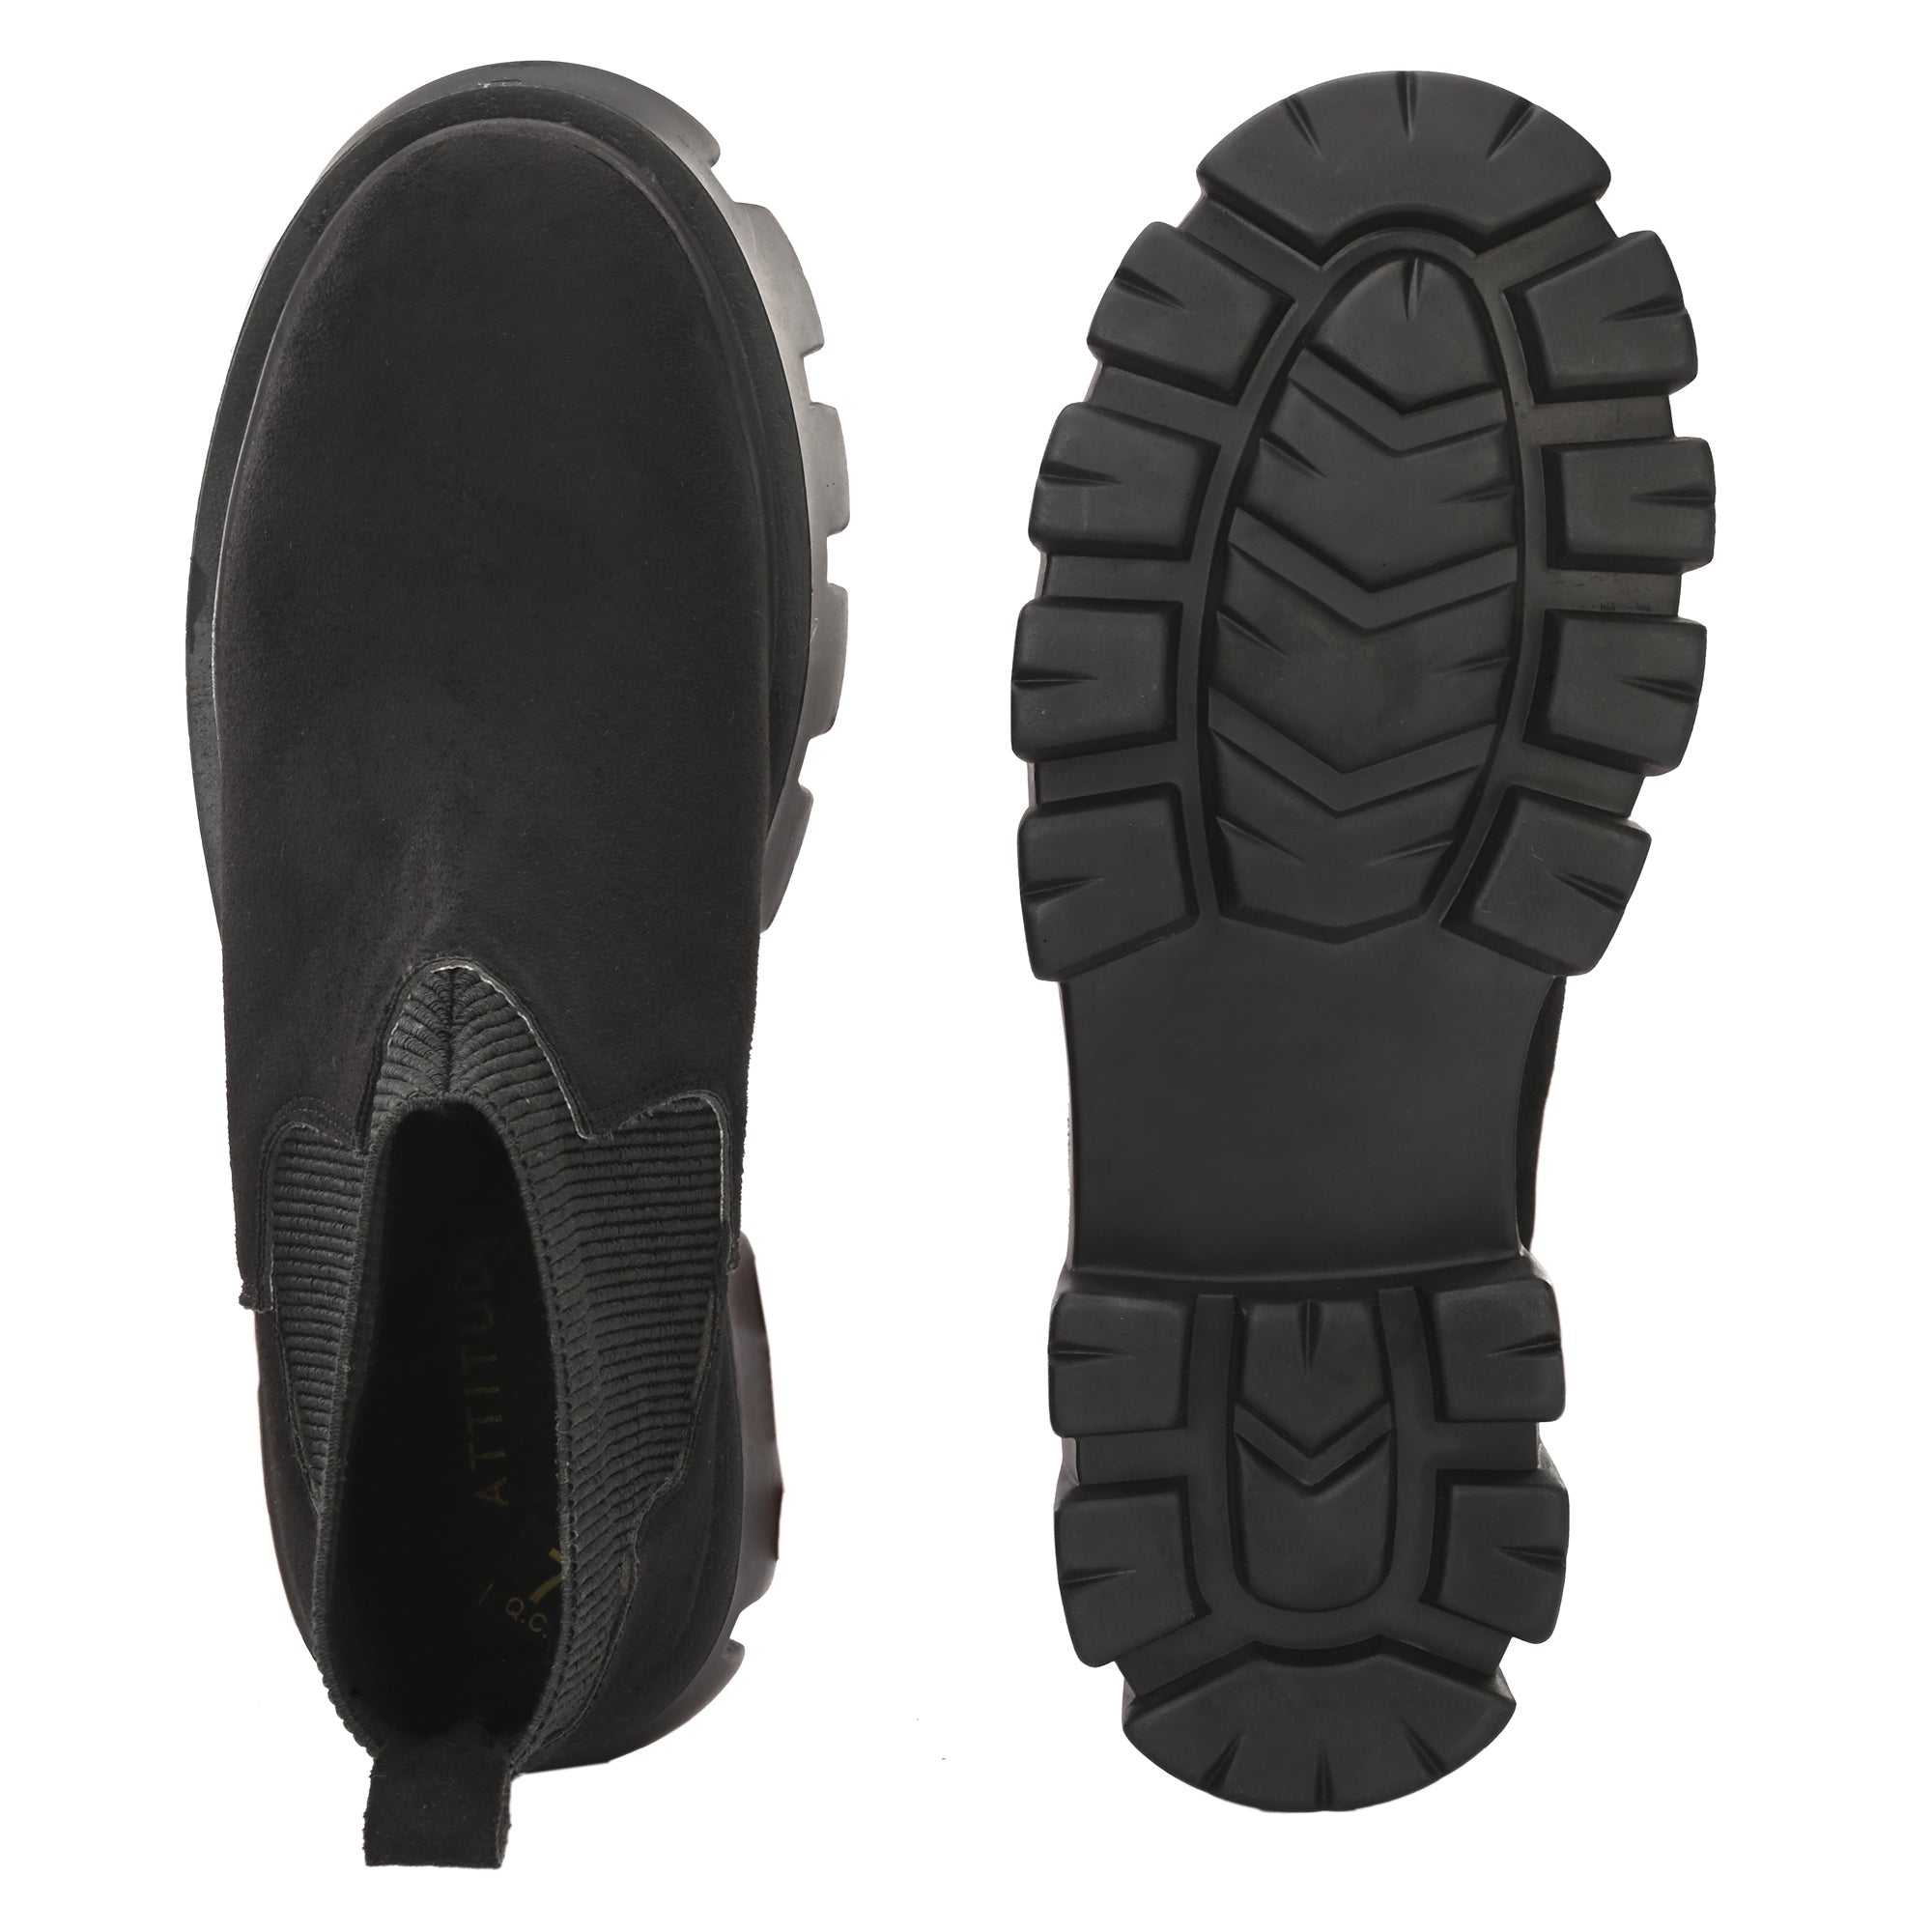 attitudist-black-strachable-shaft-chelsea-boots-for-men